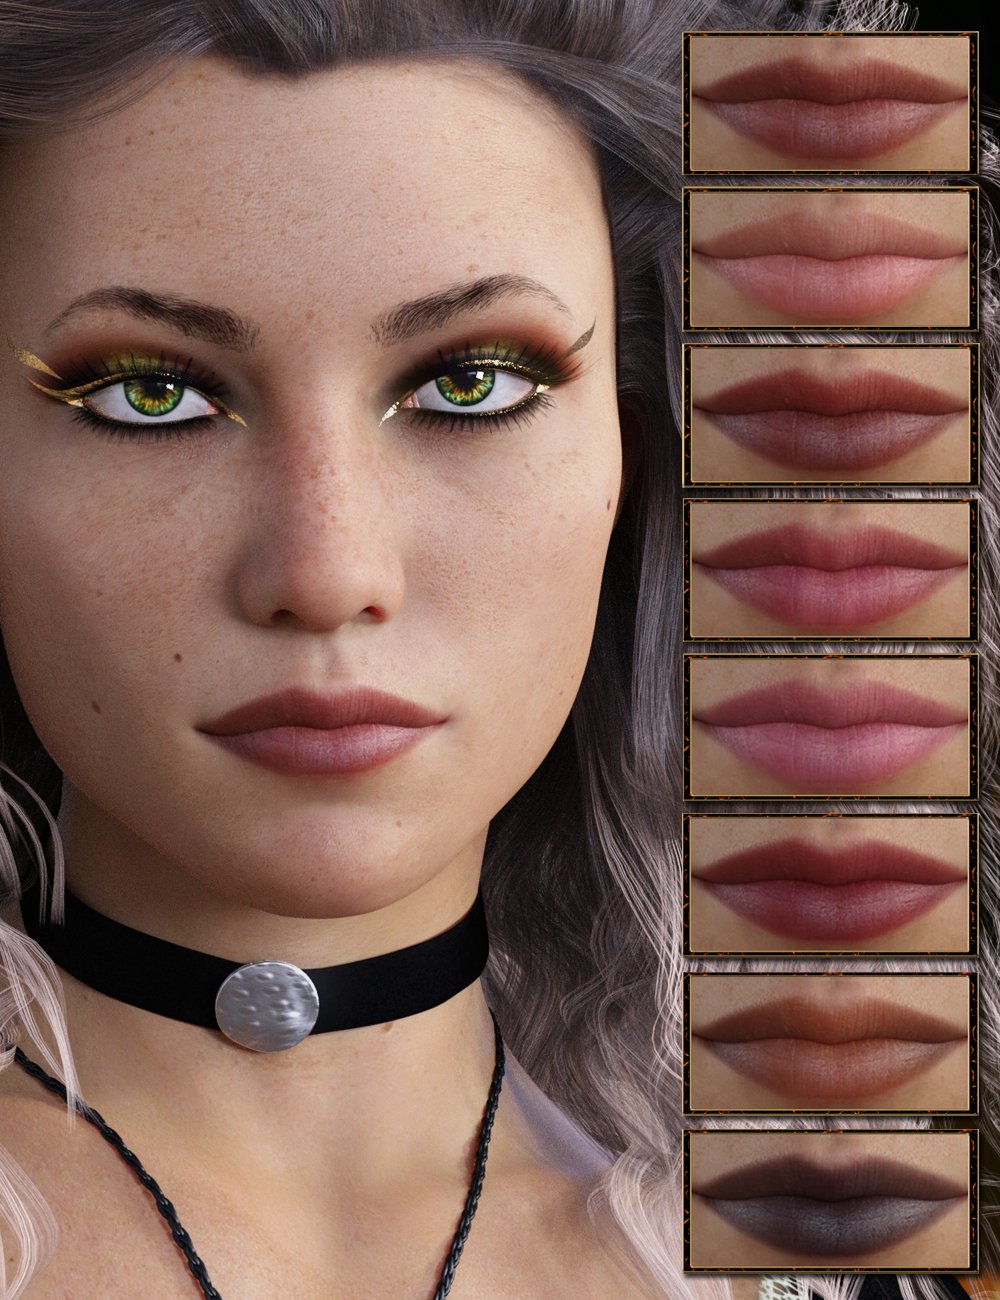 Cira for Genesis 8 Female by: gypsyangel, 3D Models by Daz 3D